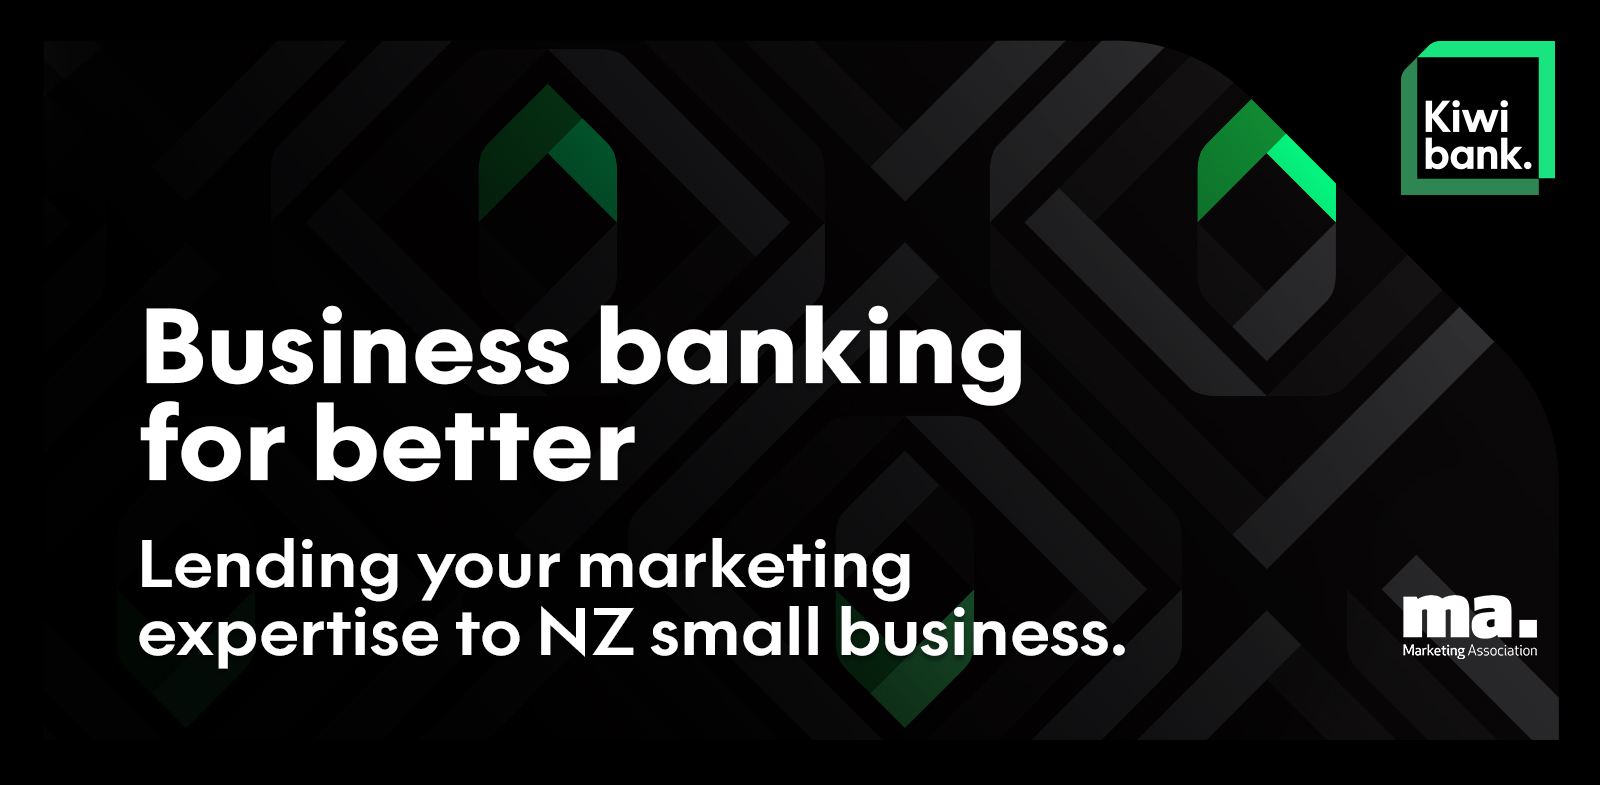 Kiwibank: Business Banking for Better